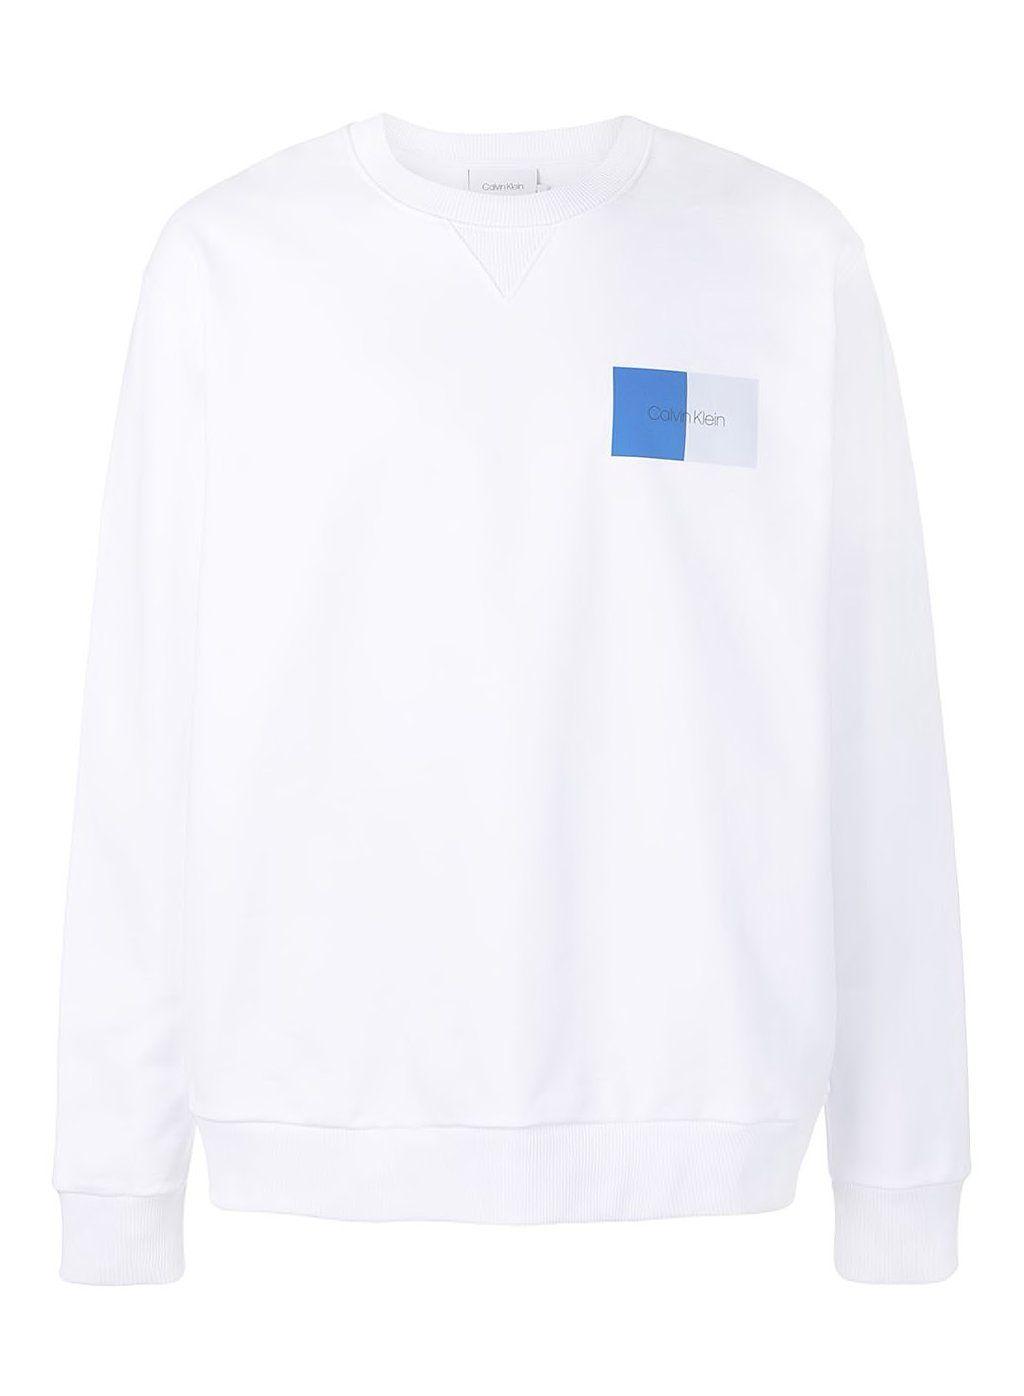 Perfect White Logo - Calvin Klein Chest Logo Relax Fit Sweatshirt White